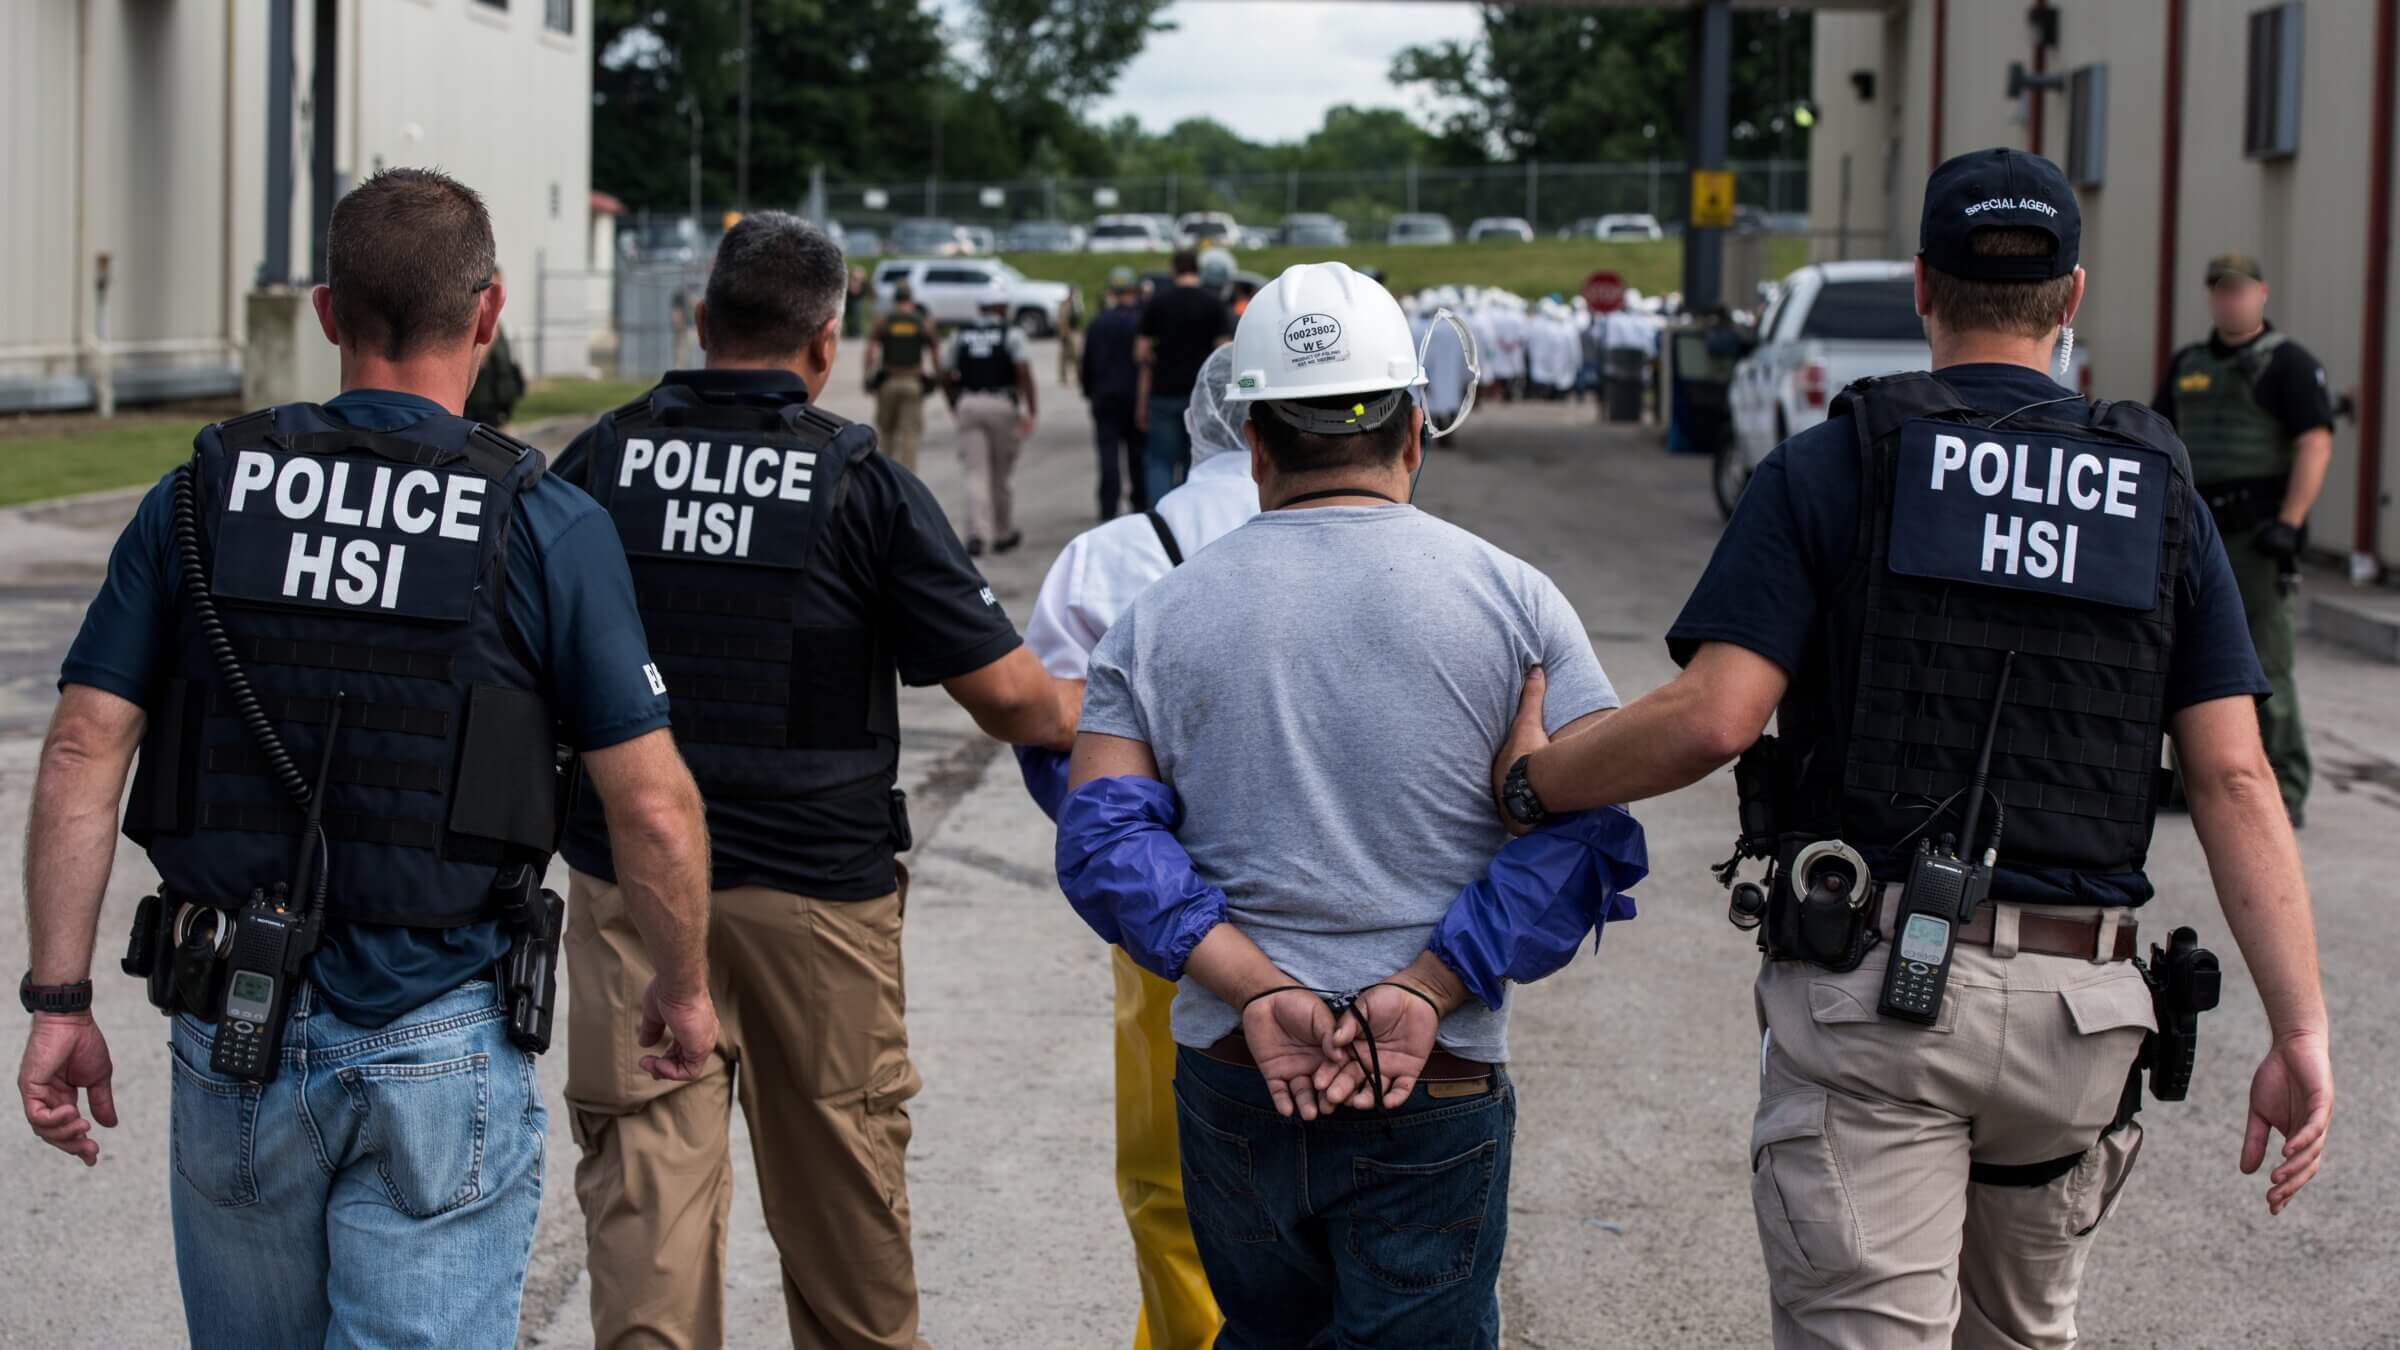 ICE special agents arrest alleged immigration violators in Ohio, June 19, 2018.